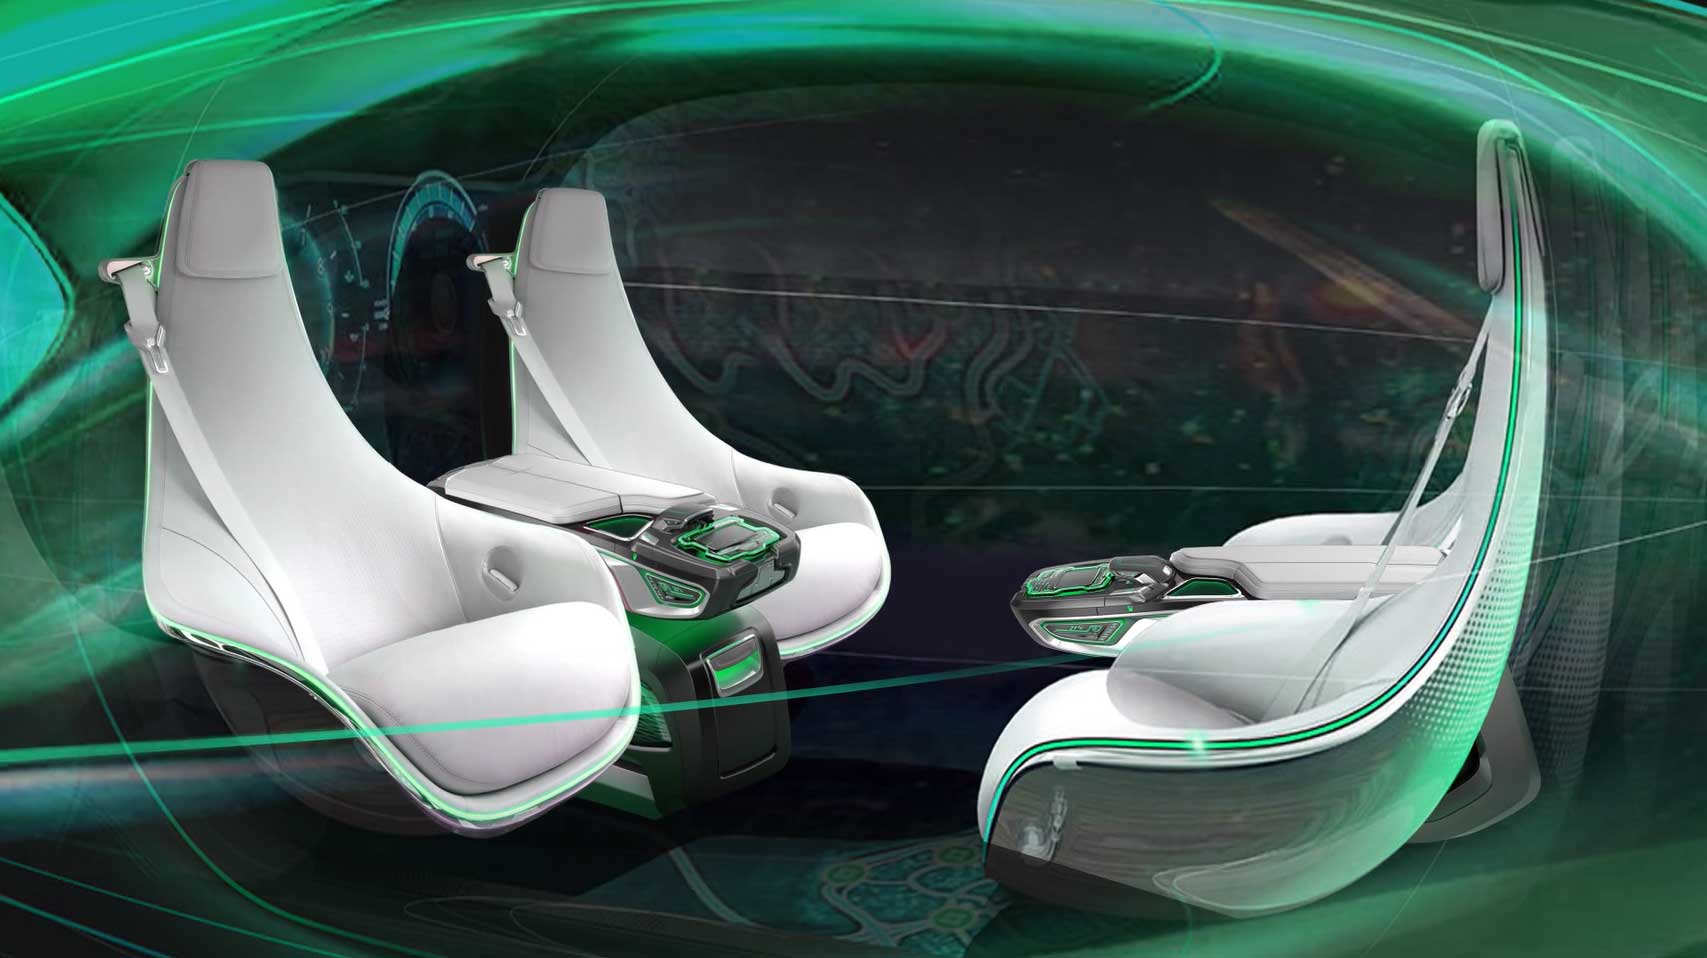 IAA Mobility 2021: Automotive interior trends of the future